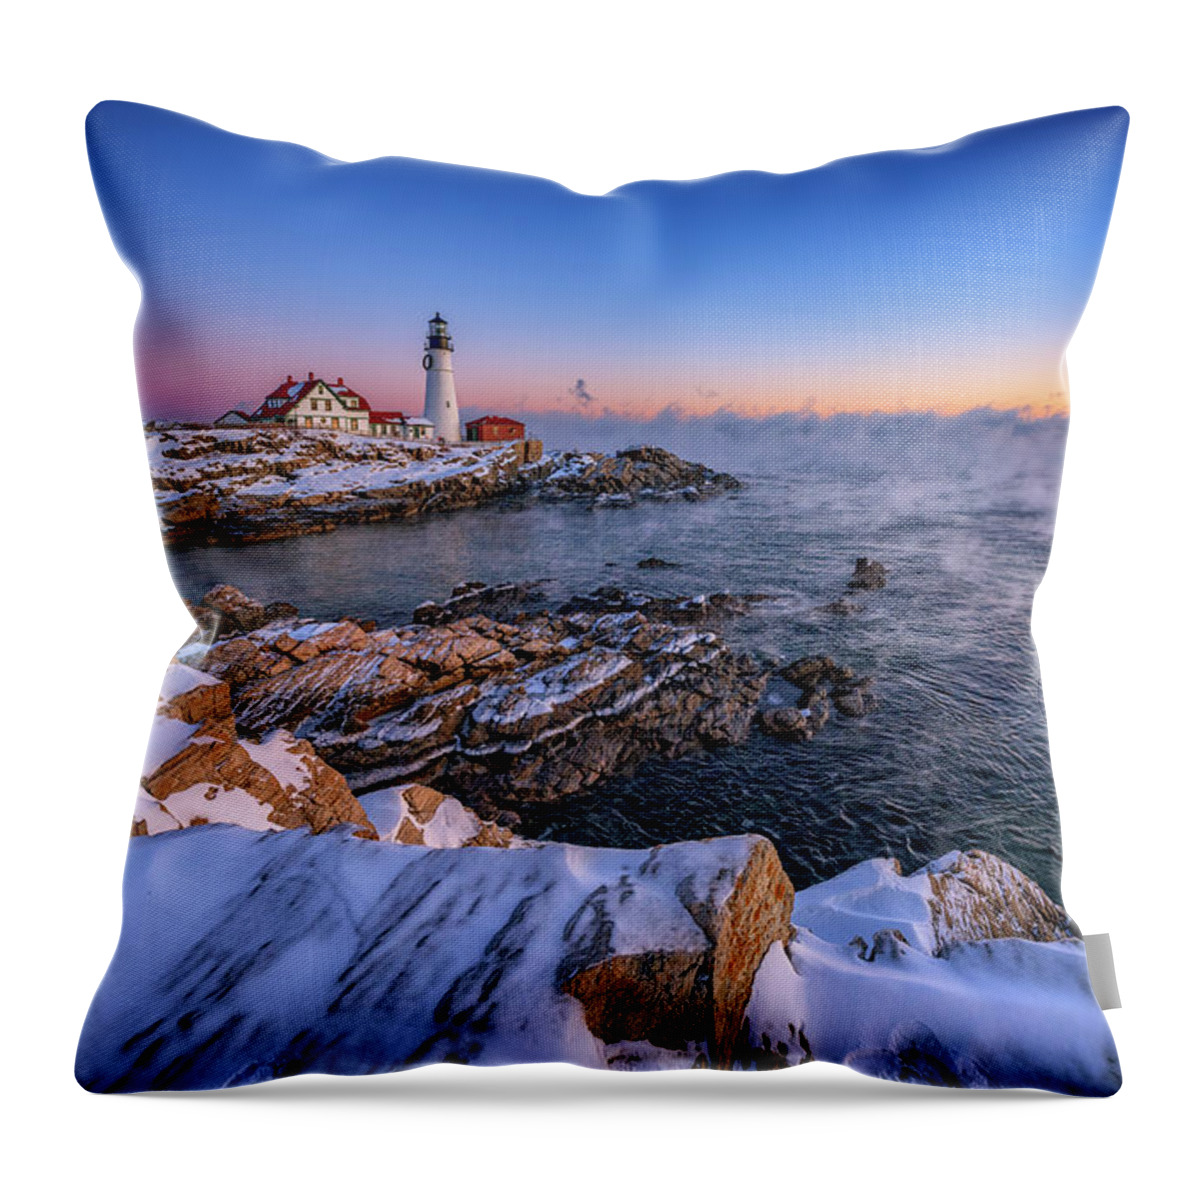 Portland Head Lighthouse Throw Pillow featuring the photograph Winter Morning at Portland Head Lighthouse by Rick Berk